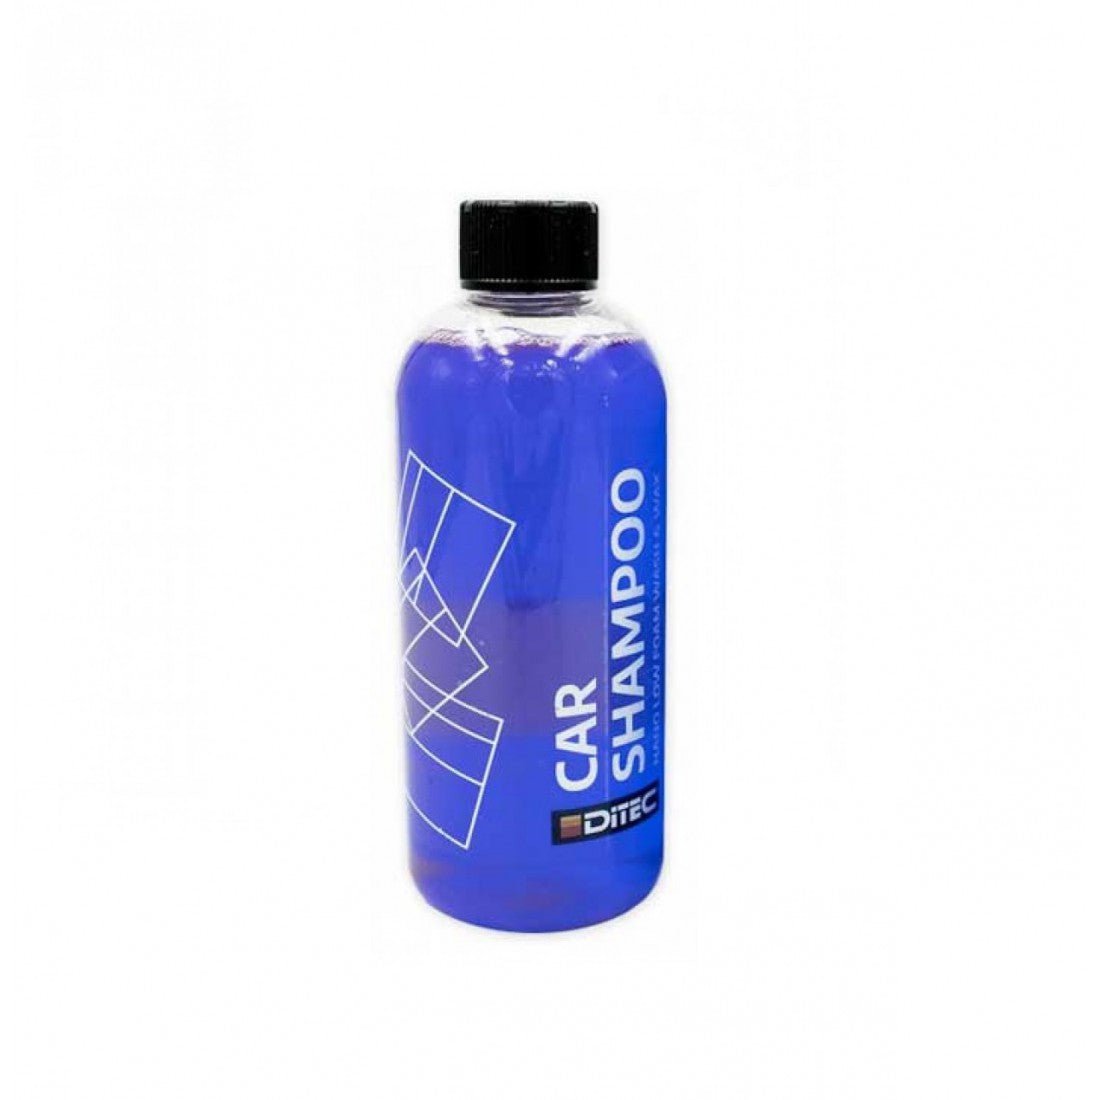 Ditec Car Shampoo 0,5 liter - bilvårdsoutleten